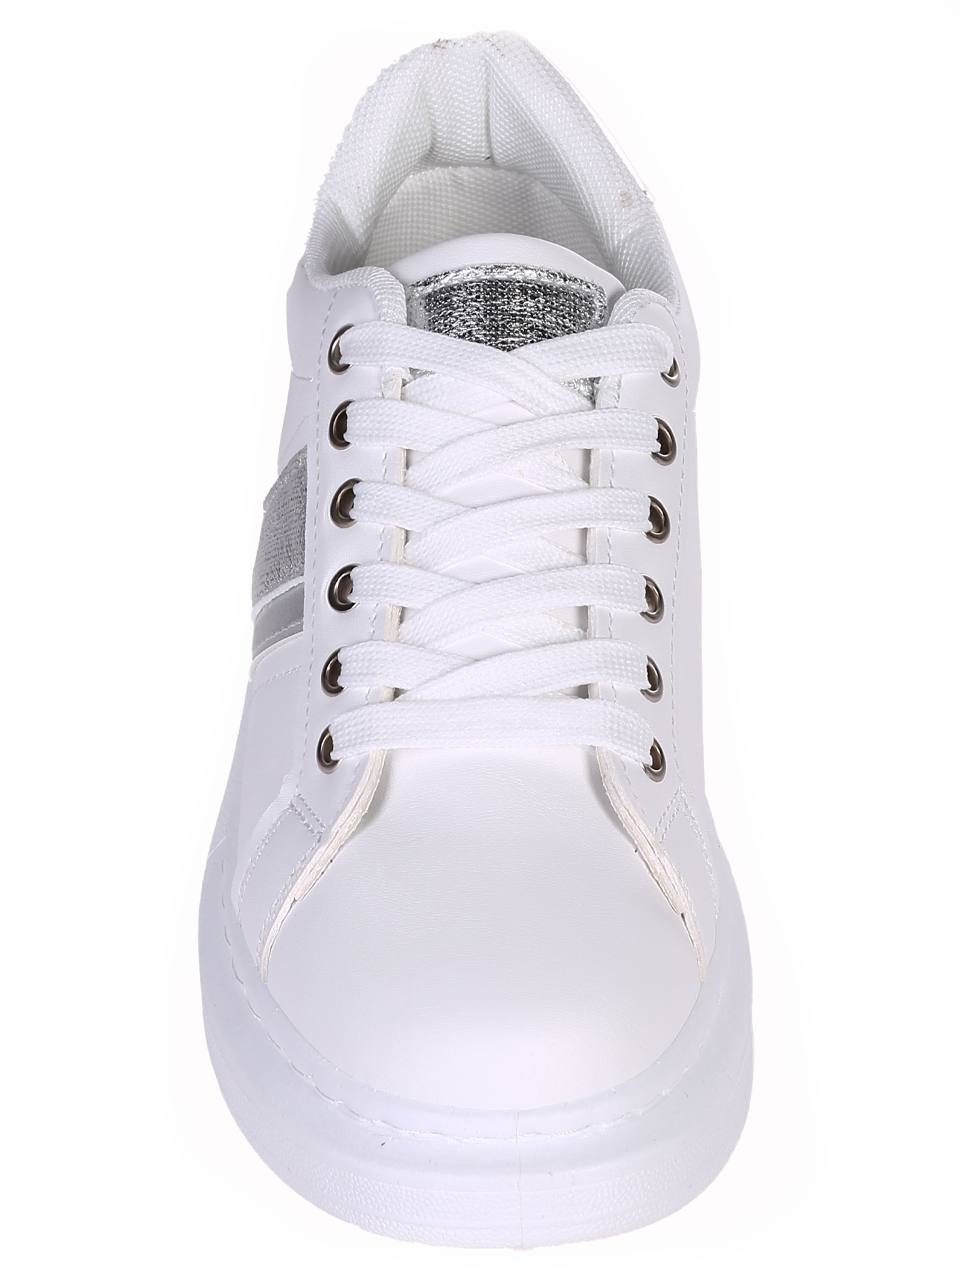 Eжедневни дамски обувки в бял/сребрист цвят 3U-23203 white/silver